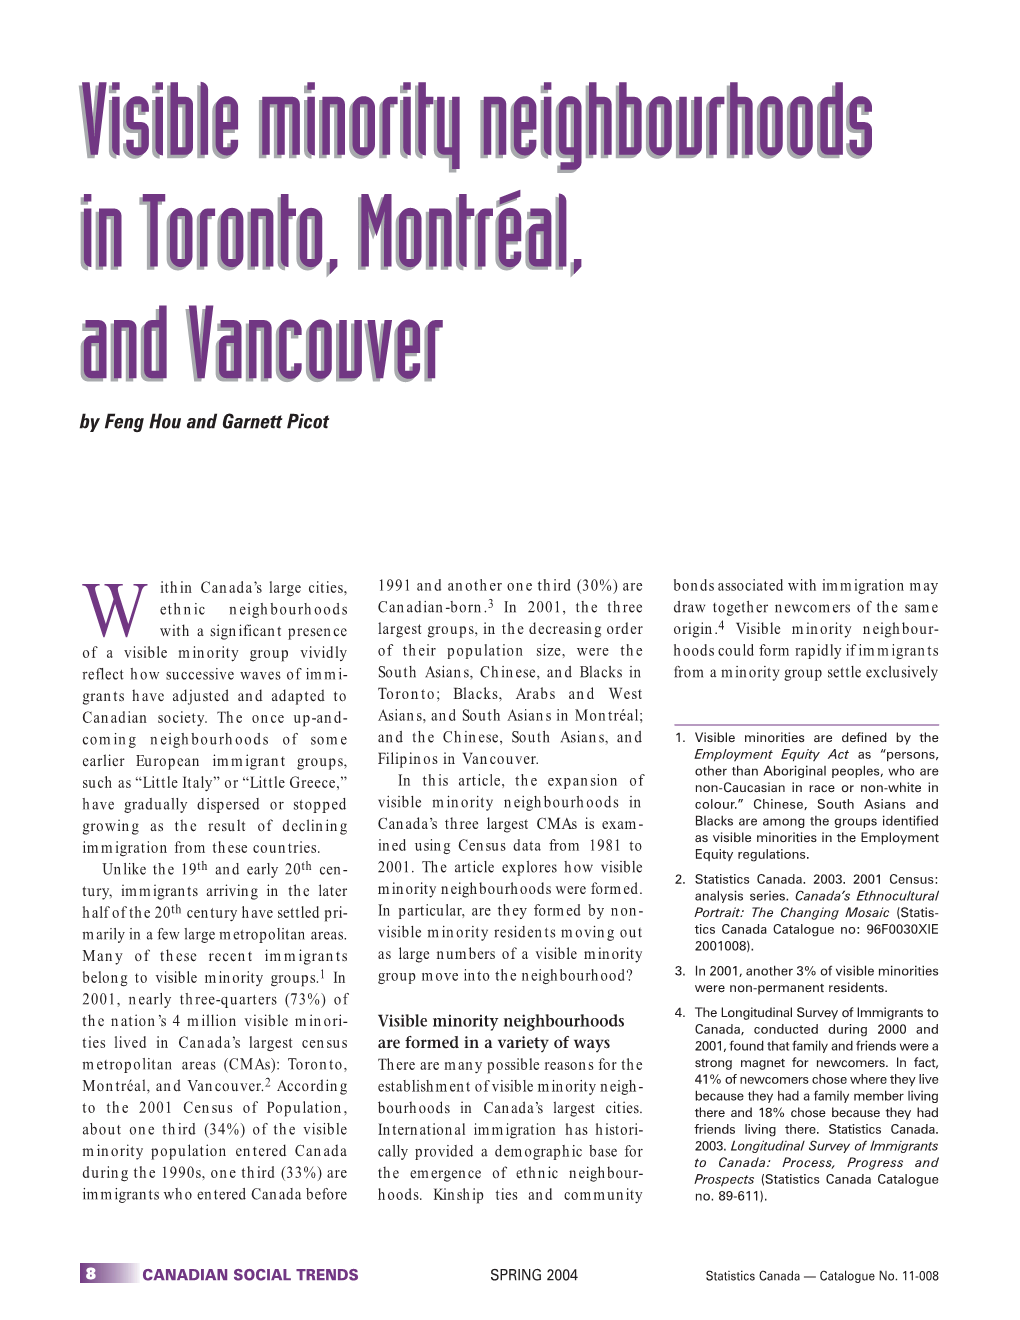 Visible Minority Neighbourhoods in Toronto, Montréal, and Vancouver